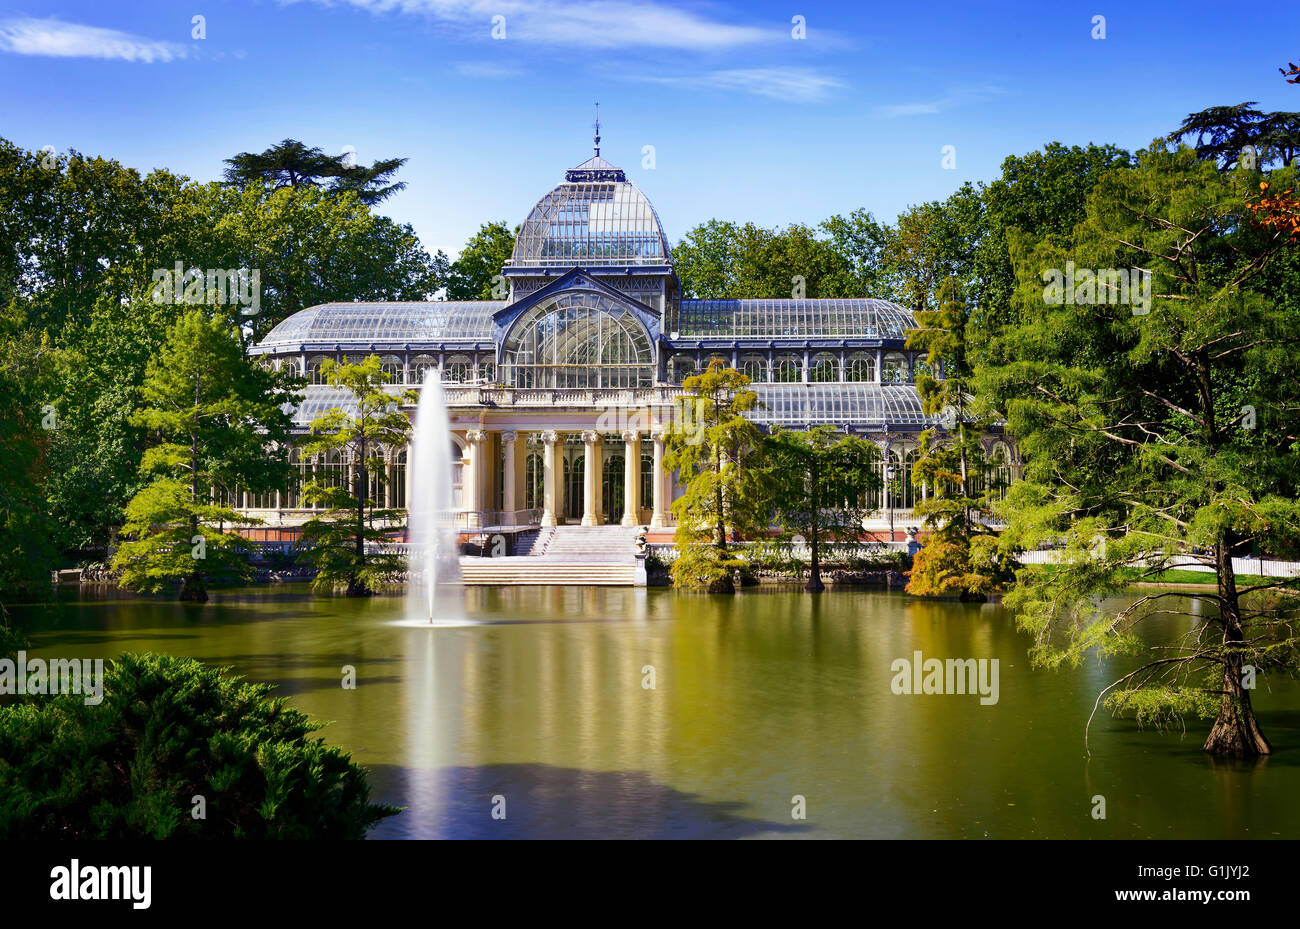 Crystal Palace, Palacio de cristal in Retiro Park,Madrid, Spain. Stock Photo